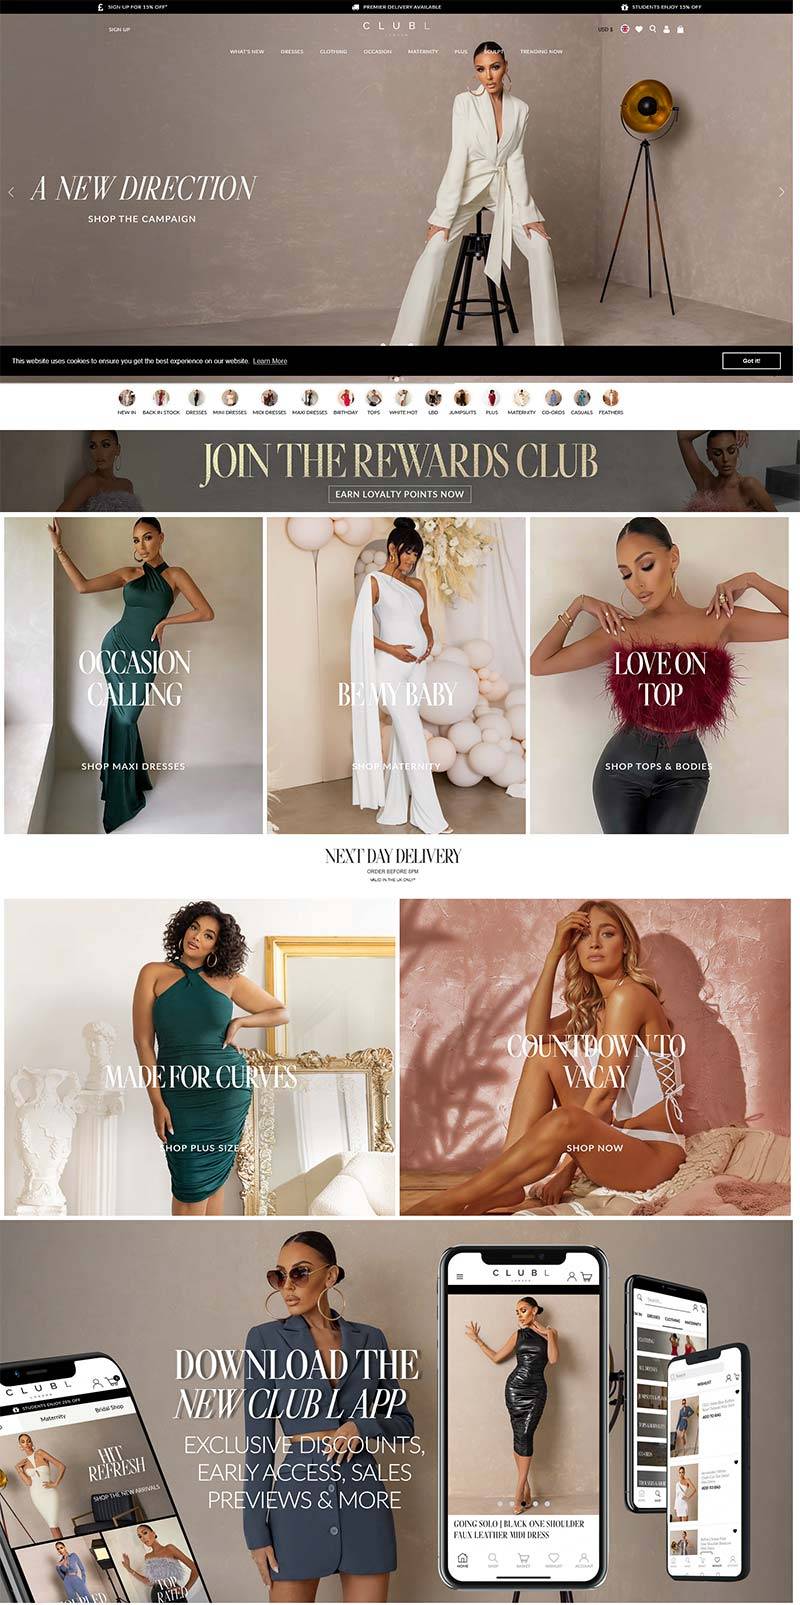 Club L London 英国时尚女装品牌购物网站